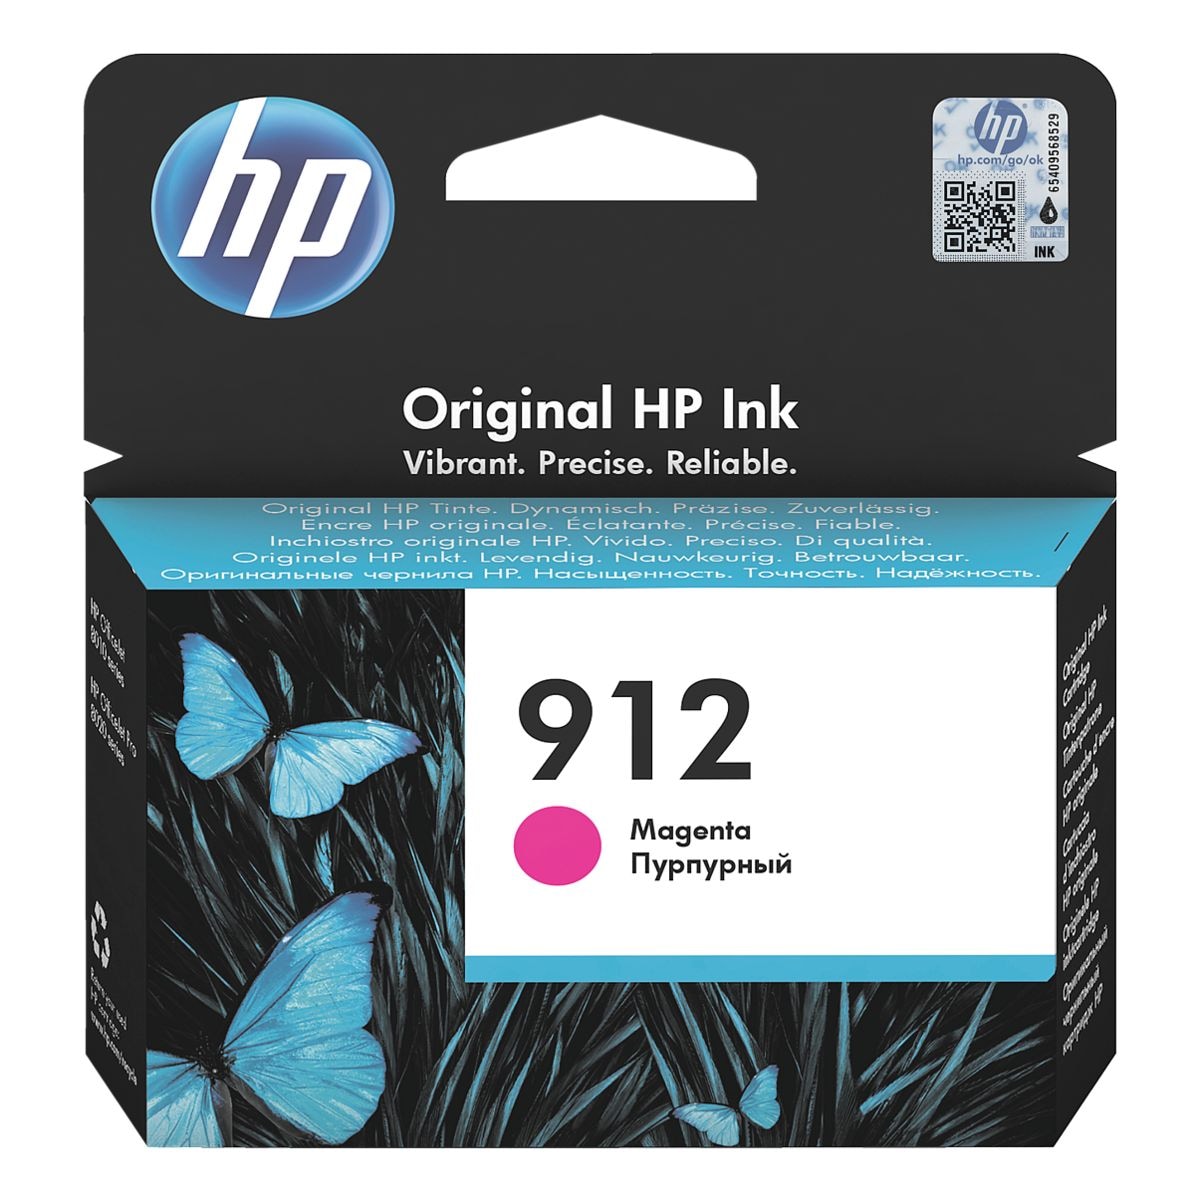 HP Tintenpatrone HP 912, magenta - 3YL78AE 